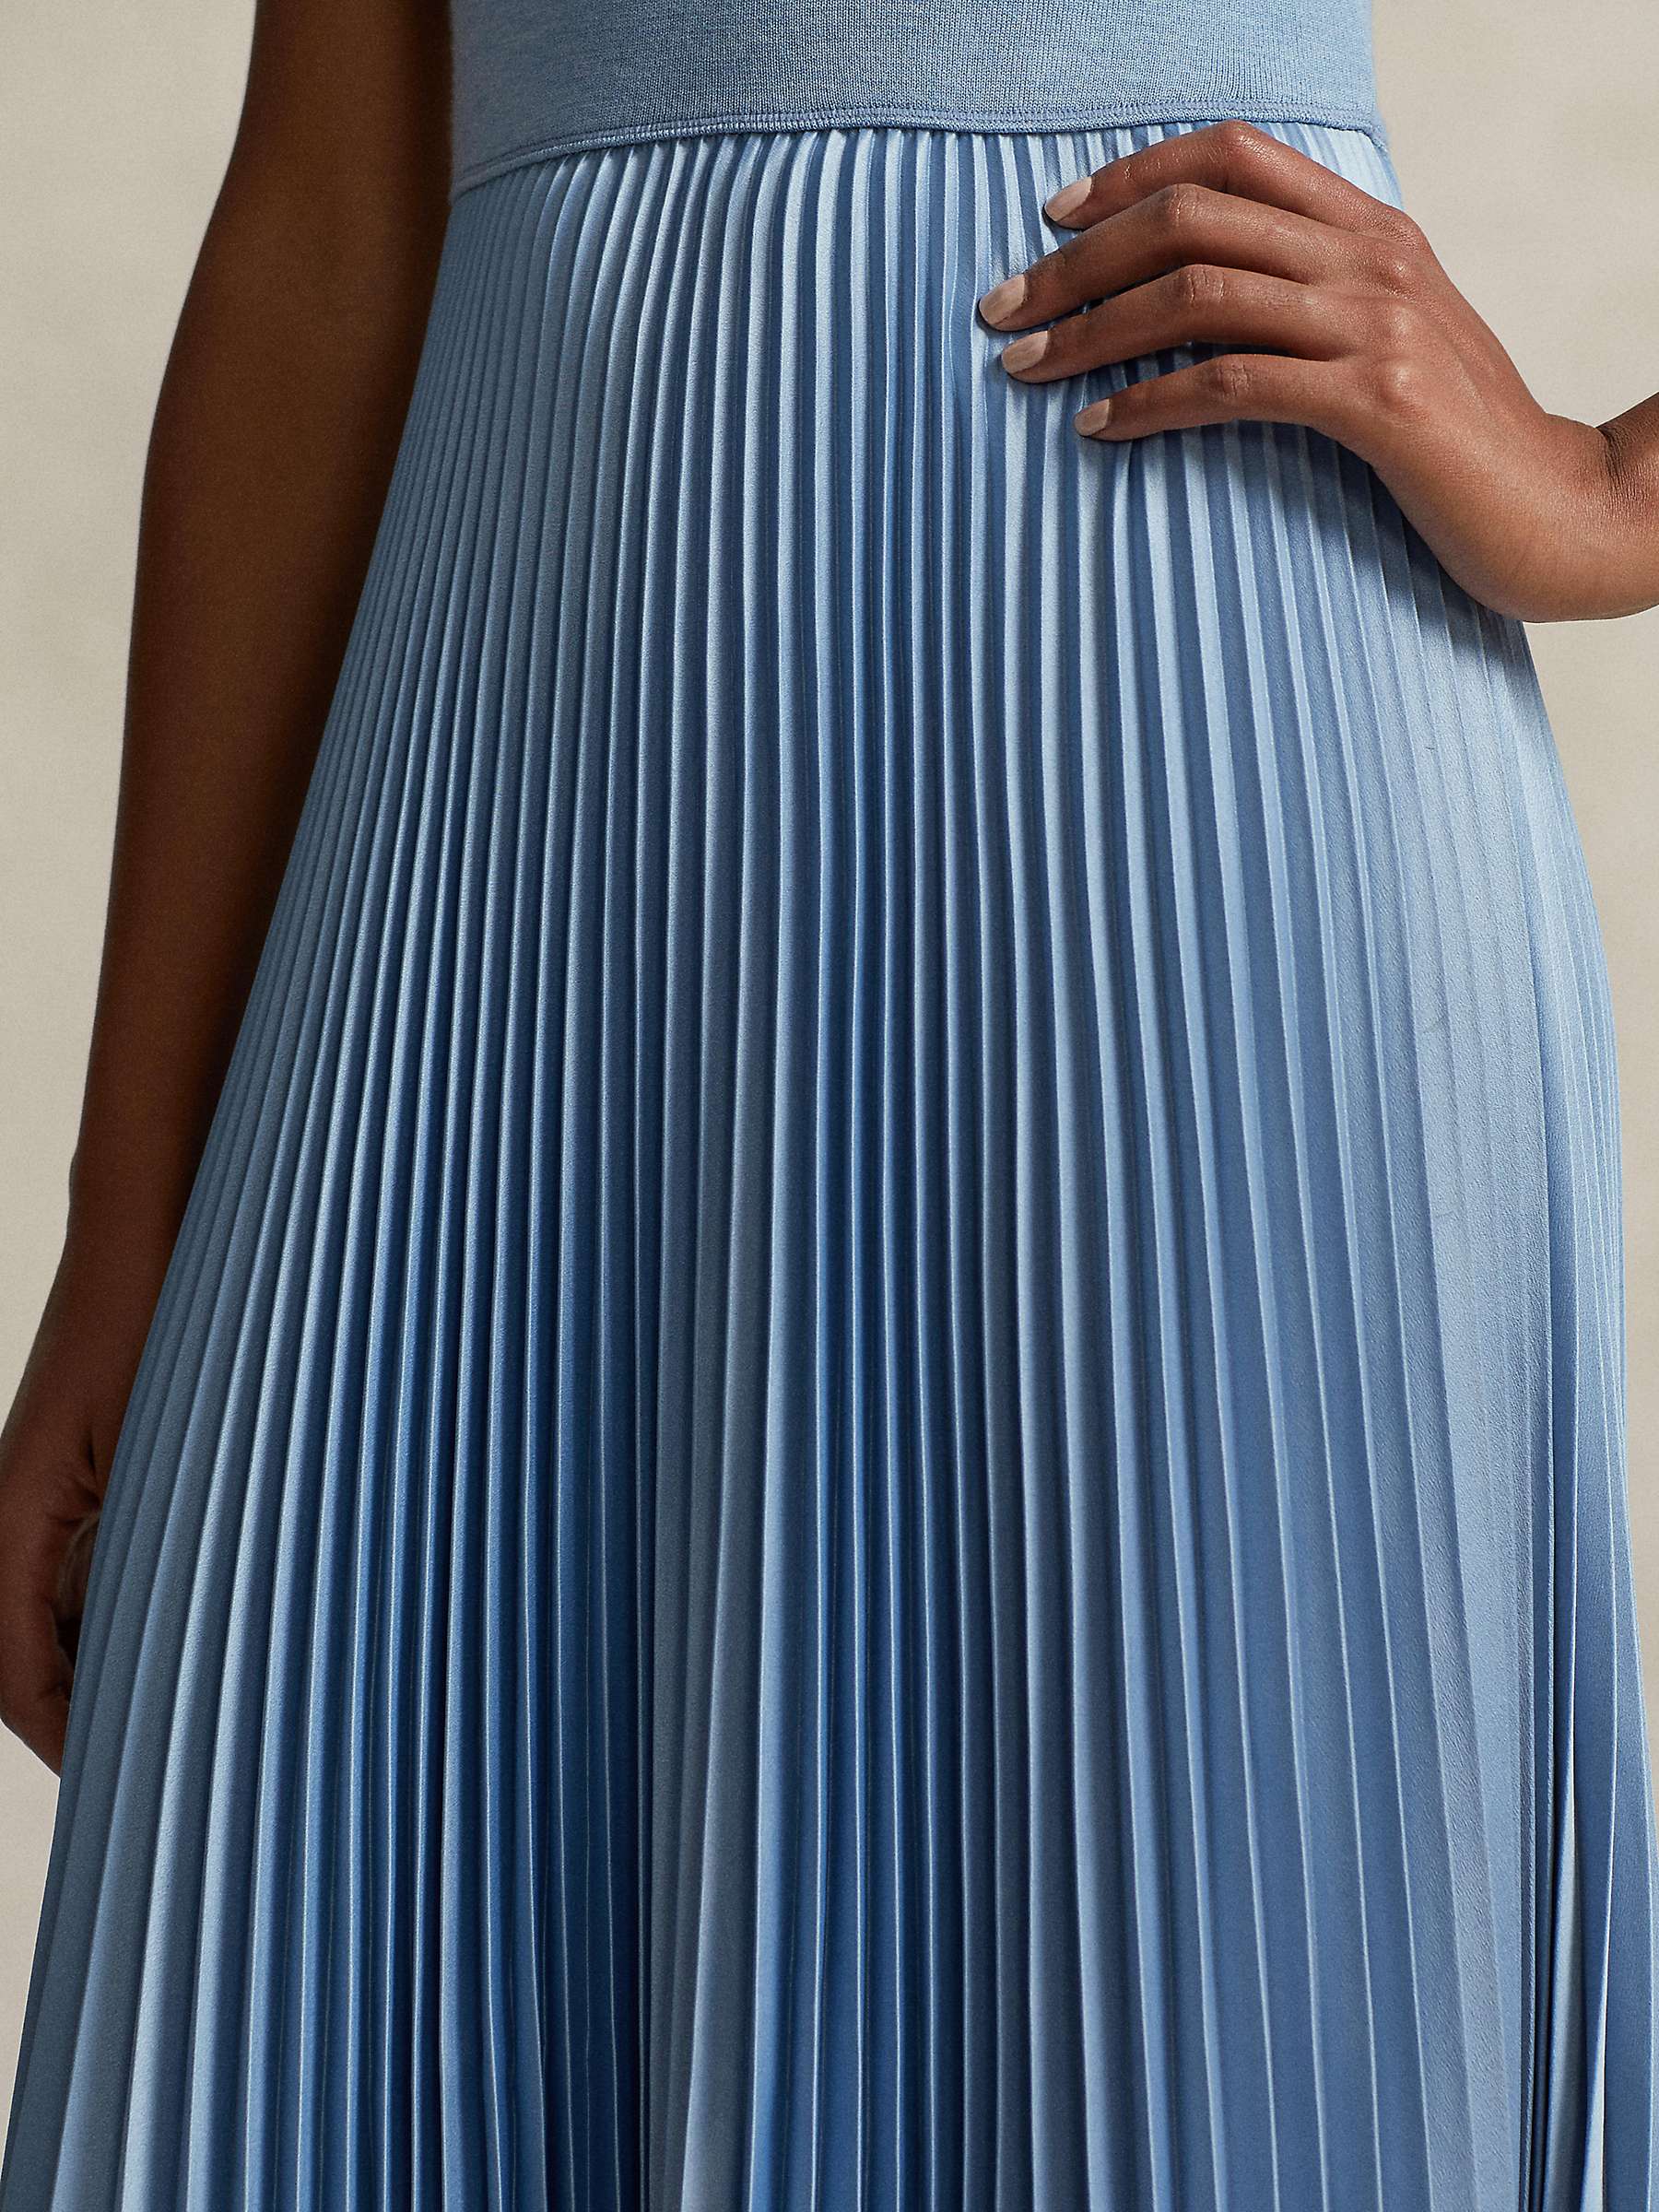 Buy Polo Ralph Lauren Gloria Knit Bodice Pleated Dress, Light Blue Online at johnlewis.com